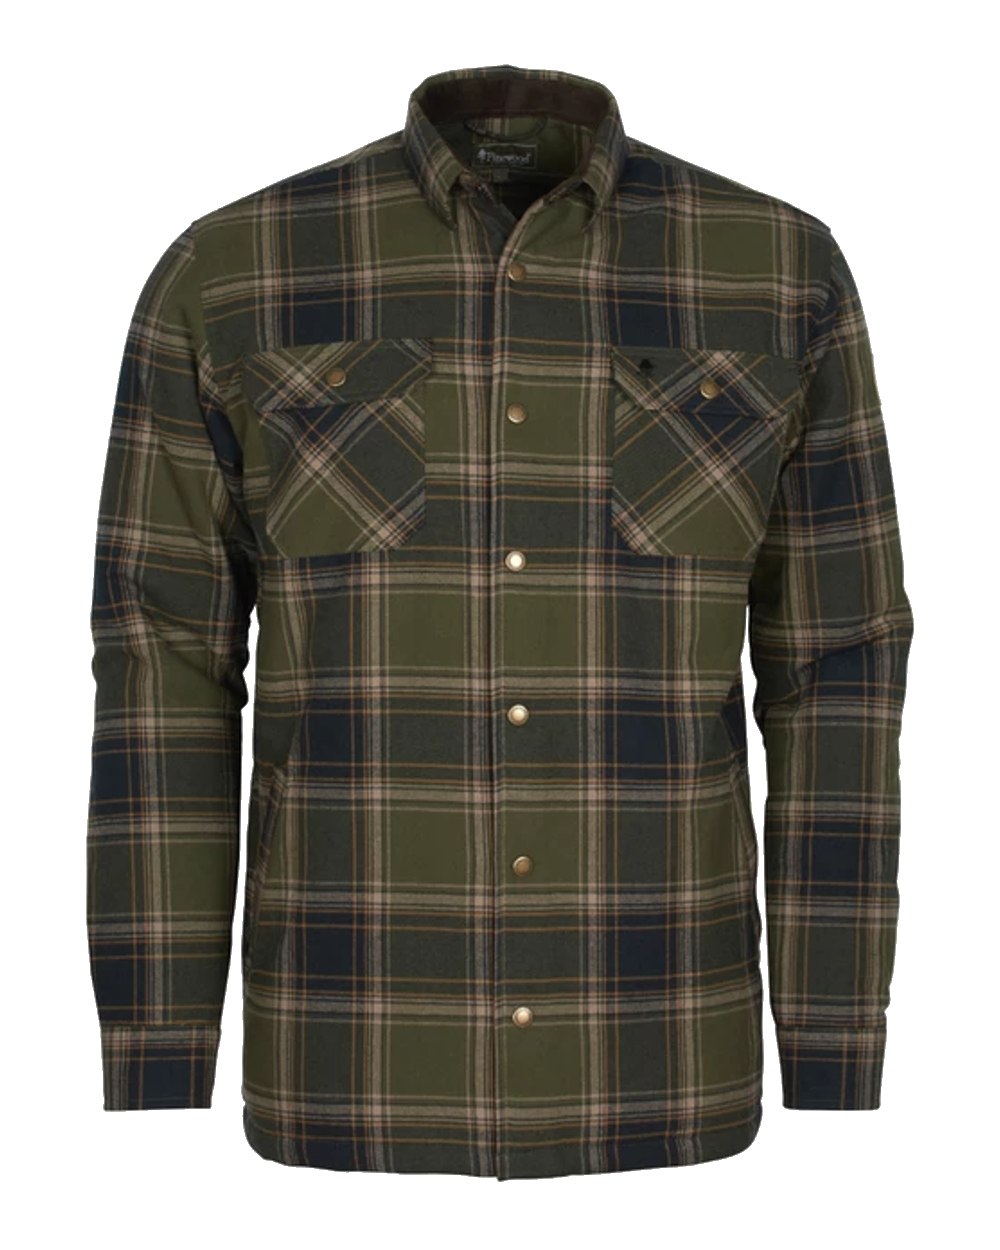 Pinewood Finnveden Check Padded Overshirt in Moss Green/Black